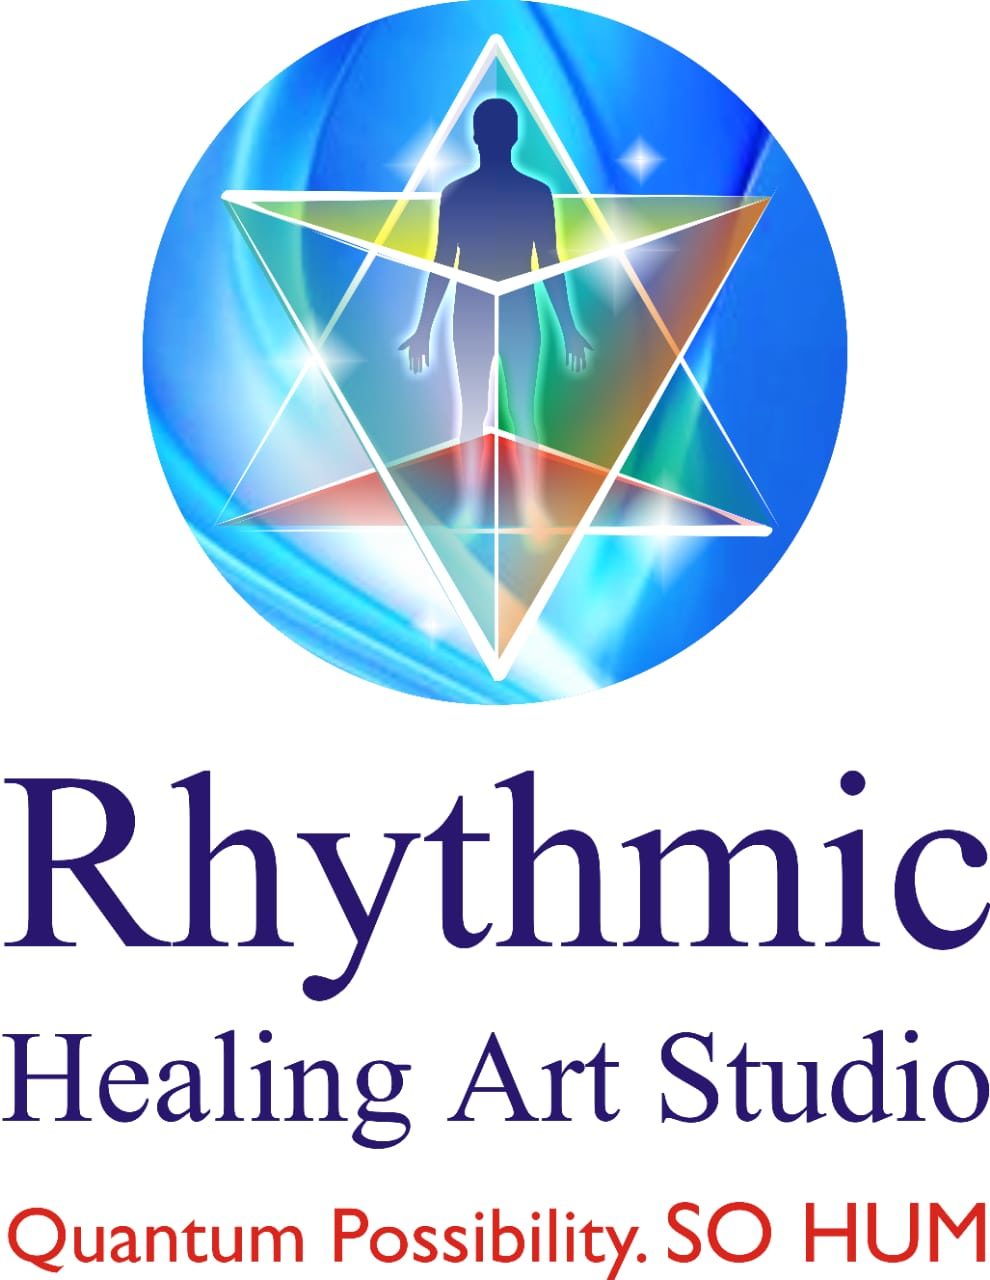 Rhythmic Healing Art Studio